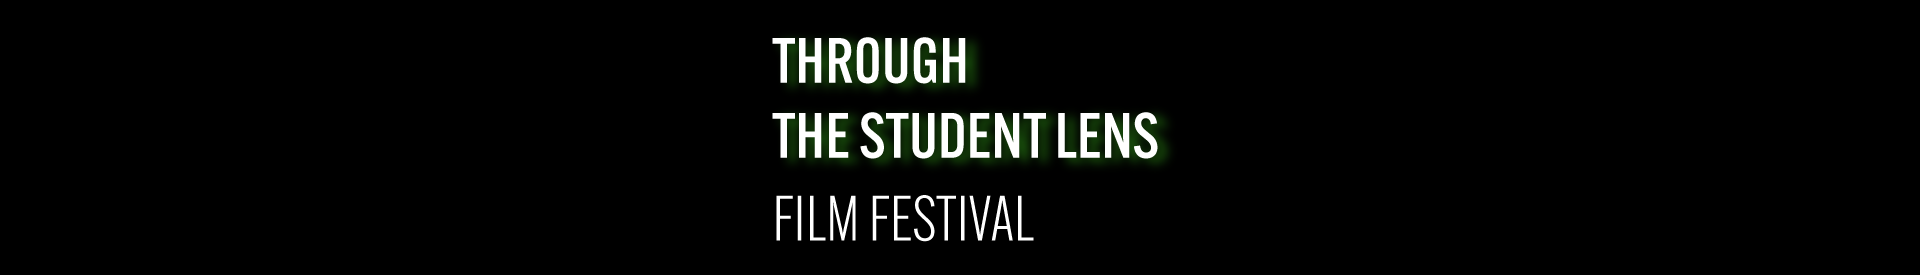 Through the Student Lens Film Festival